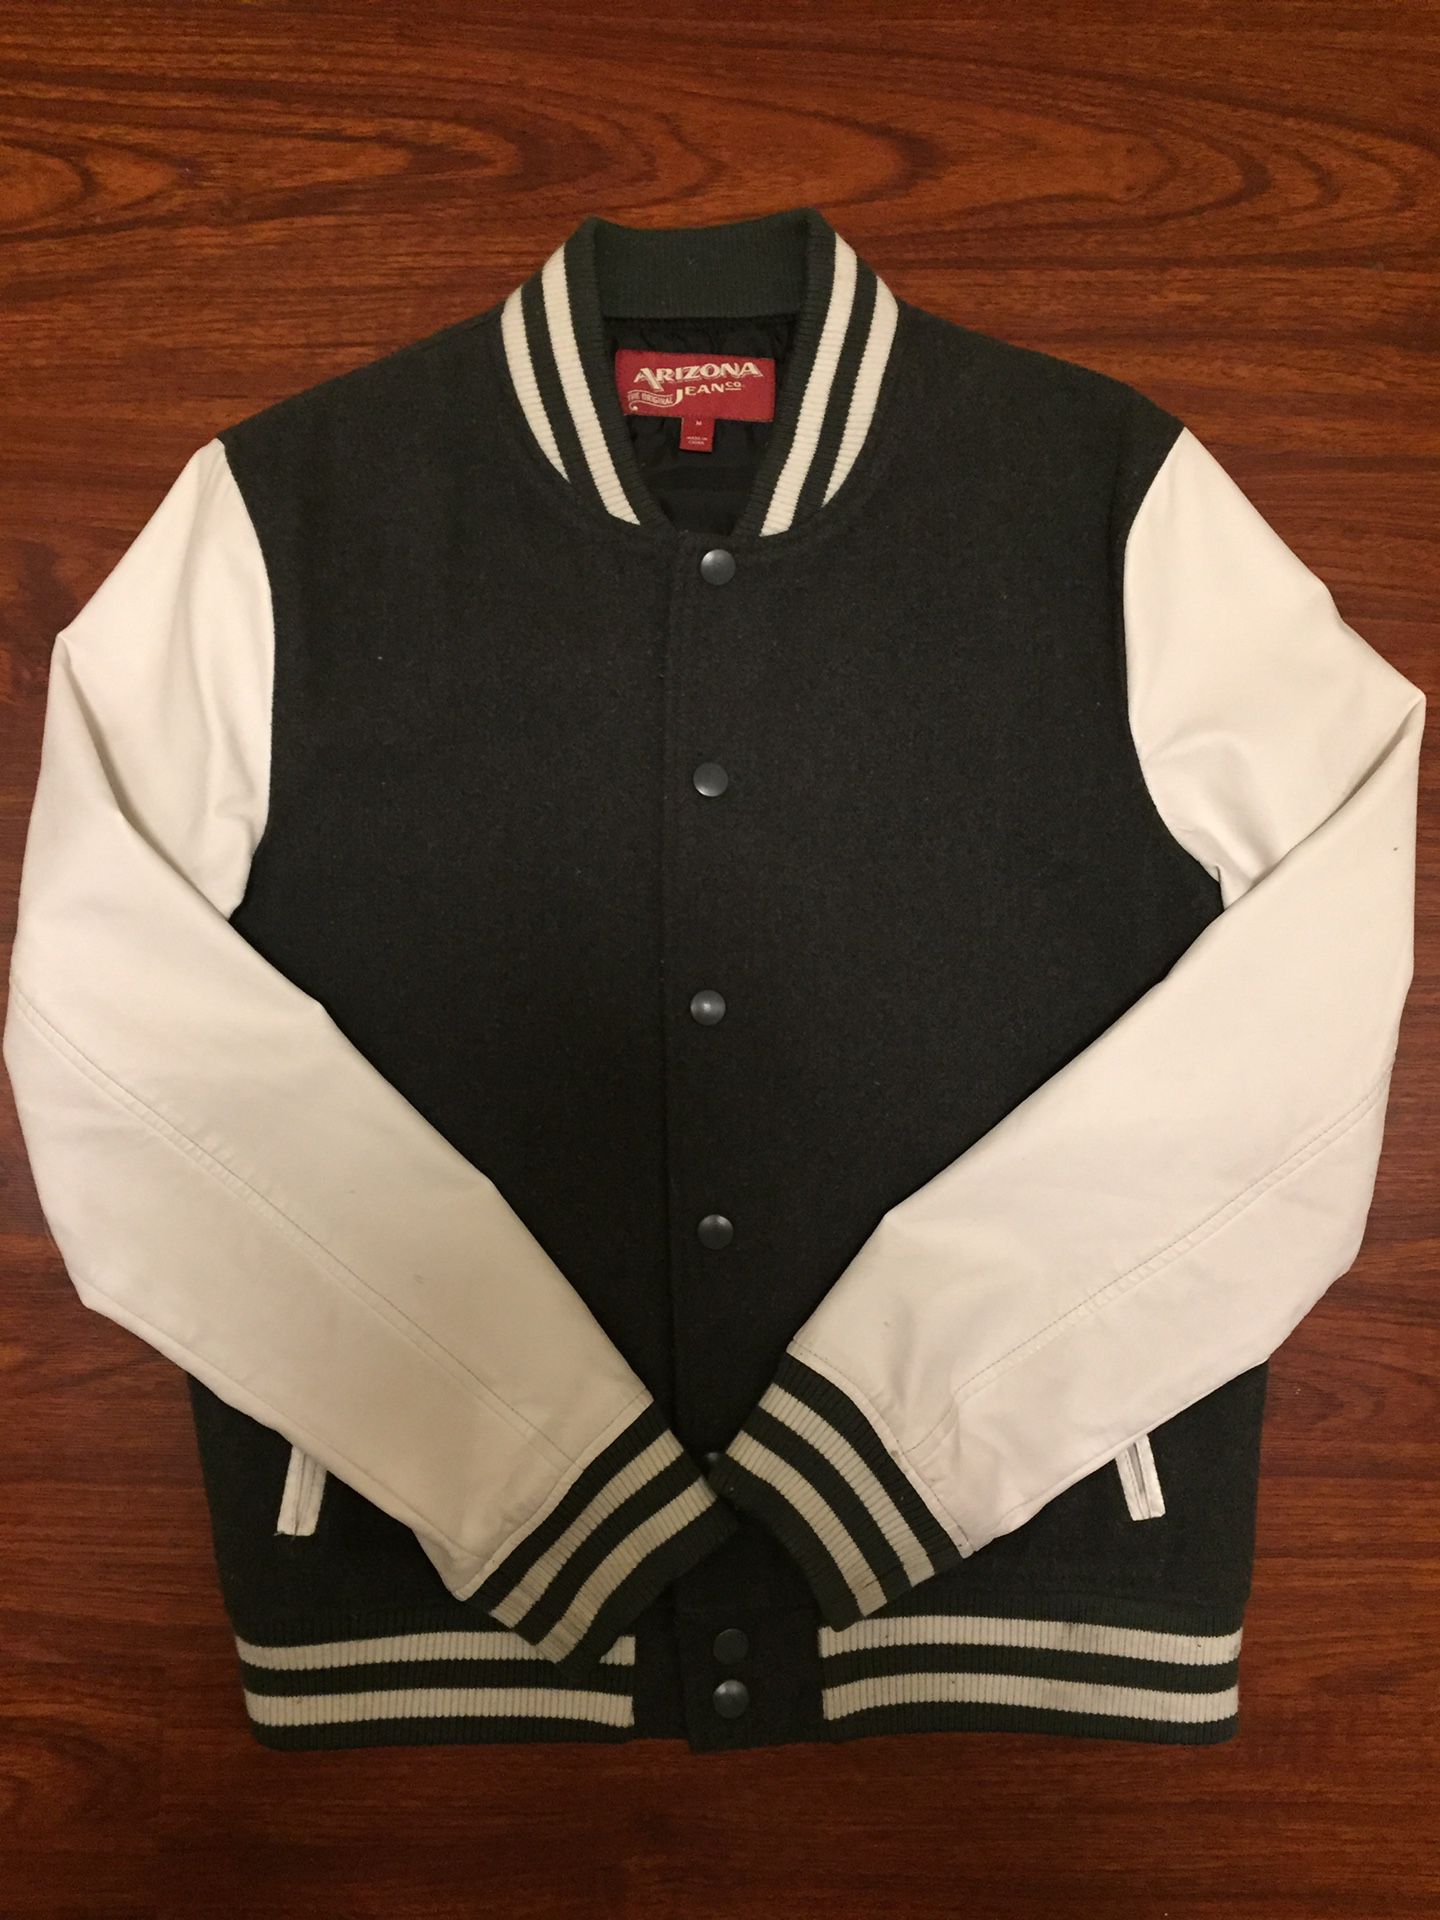 Letterman’s jacket